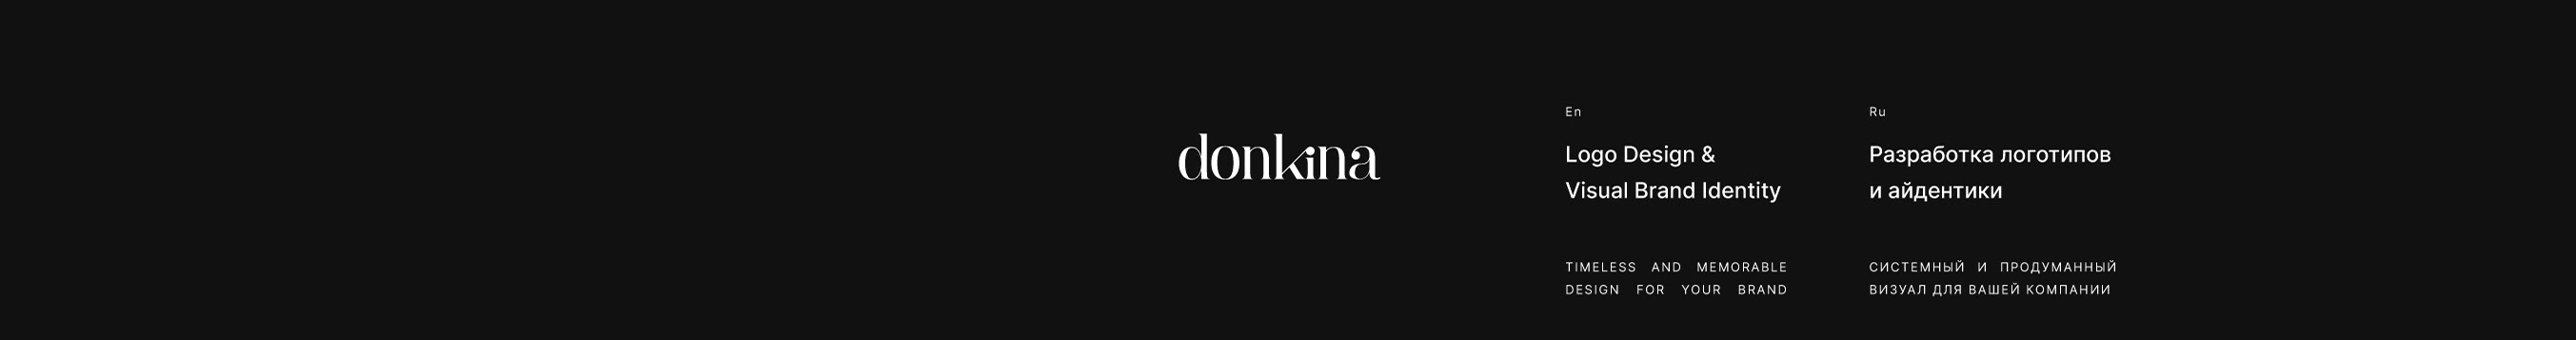 Olga Donkina's profile banner